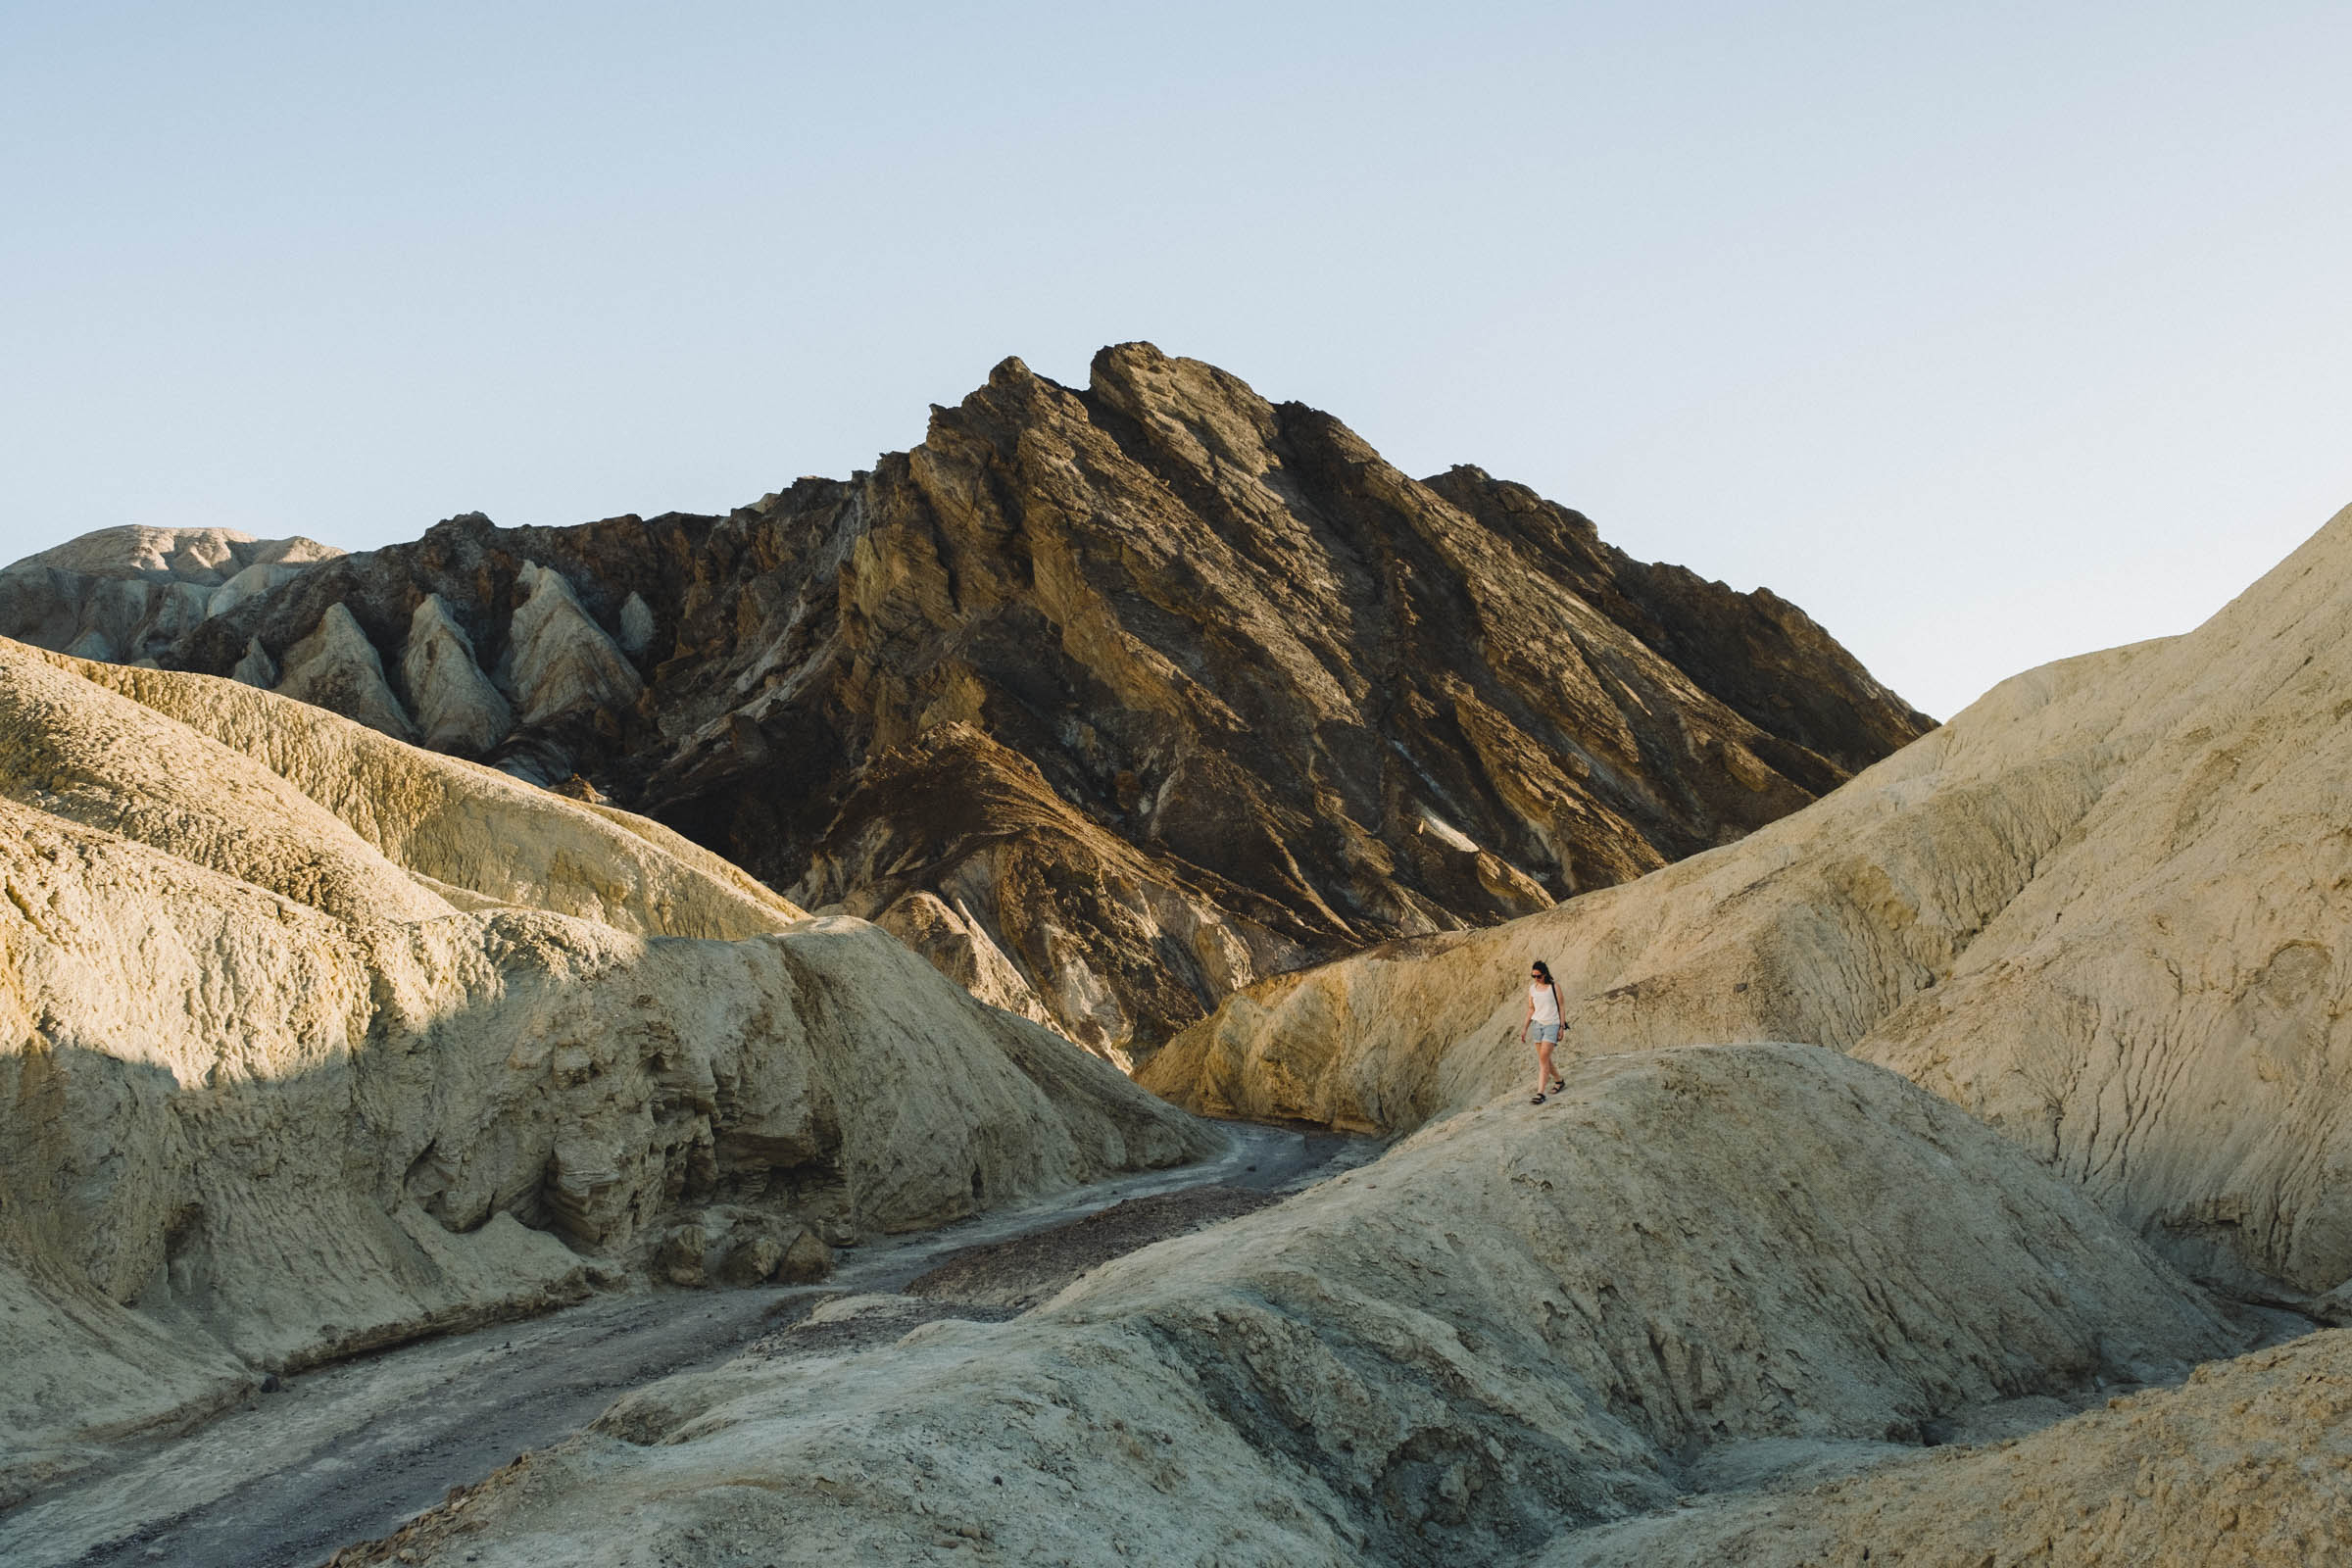 The startling sculpted landscapes of Death Valley